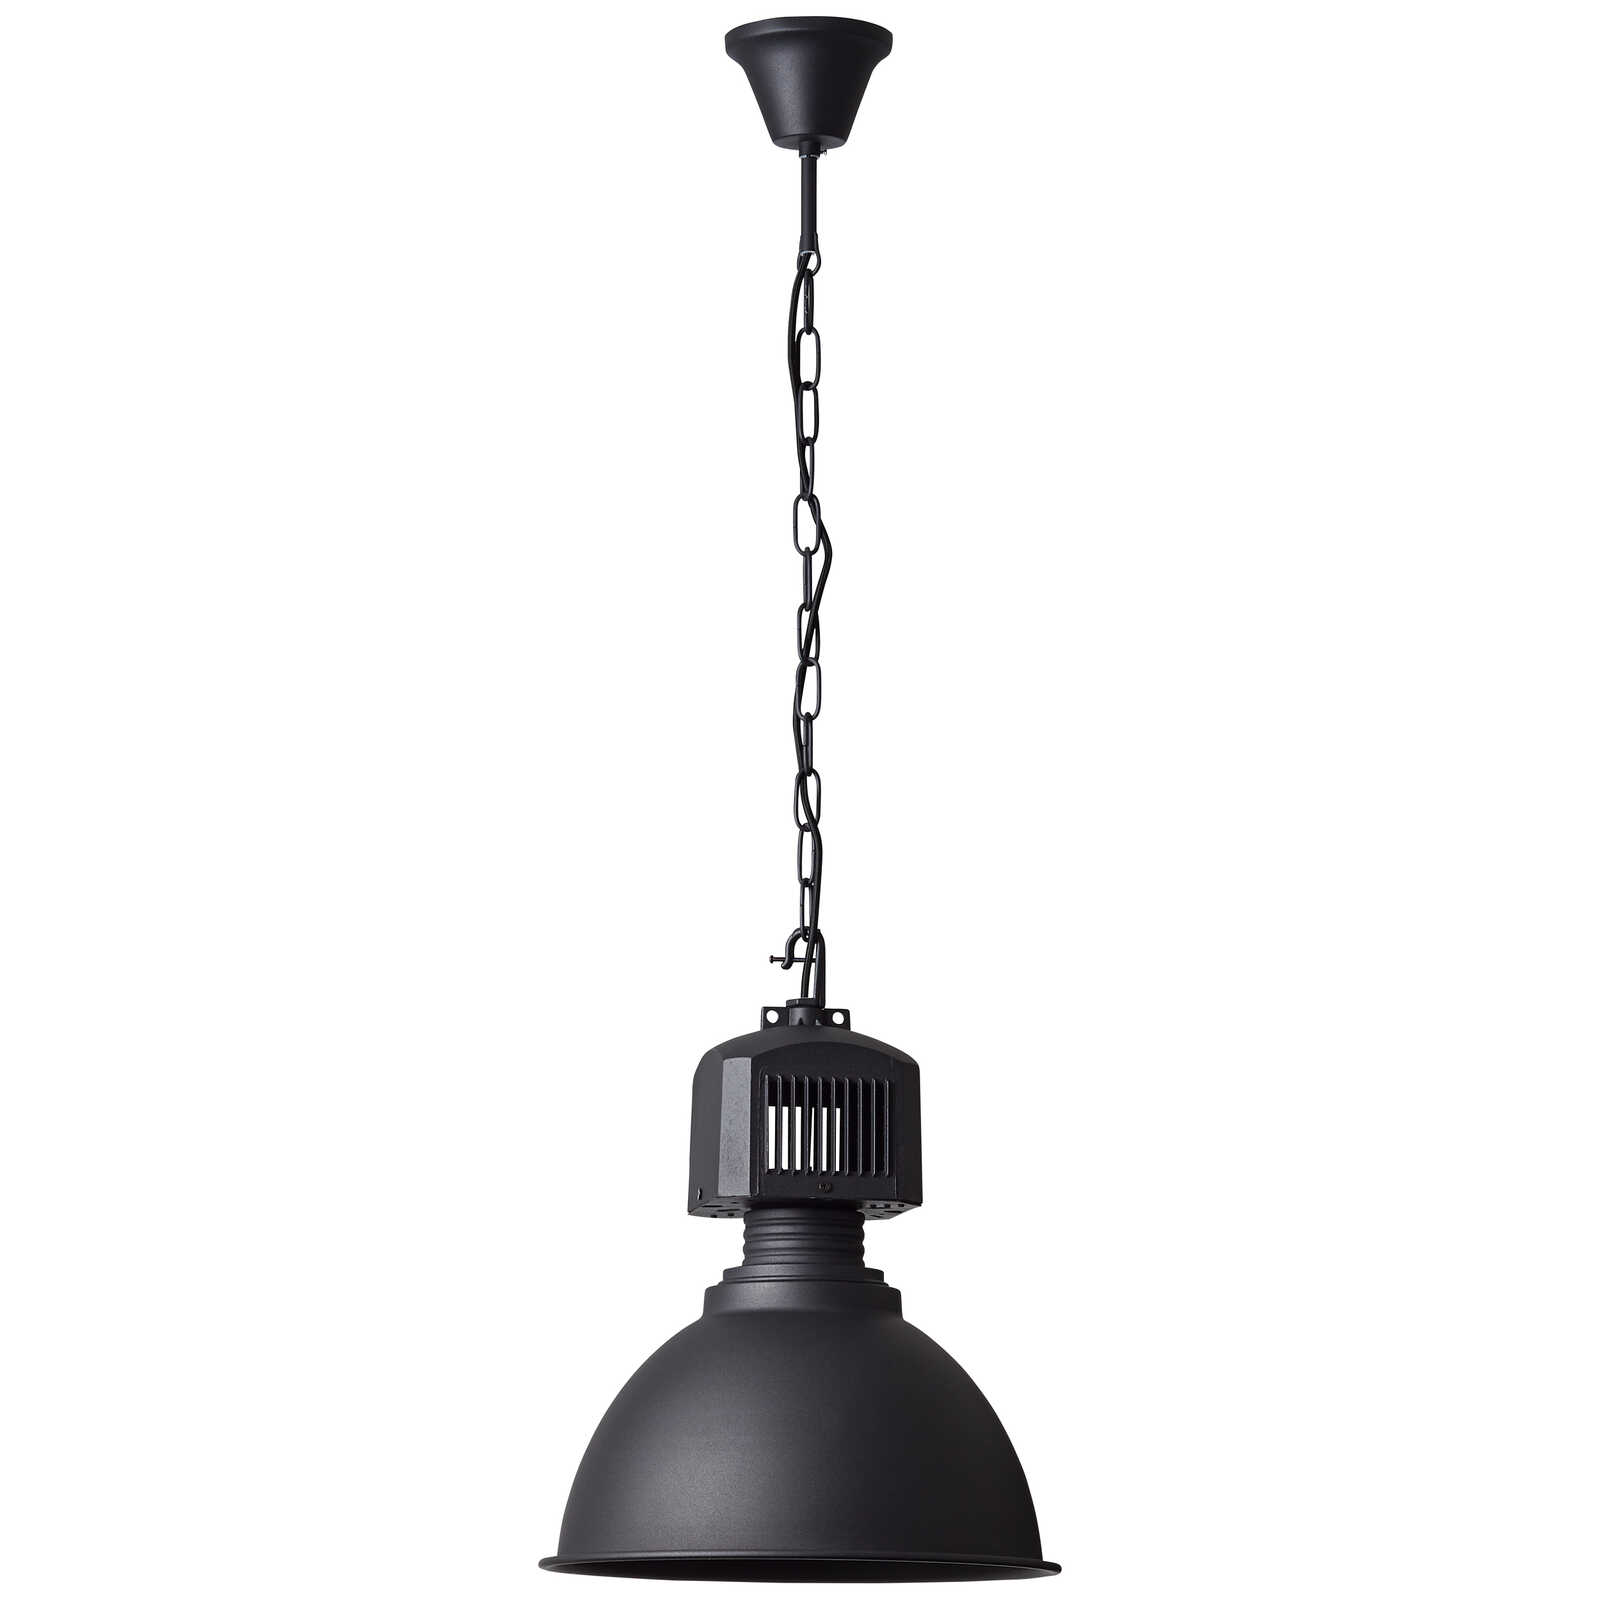             Metalen hanglamp - Cara - Zwart
        